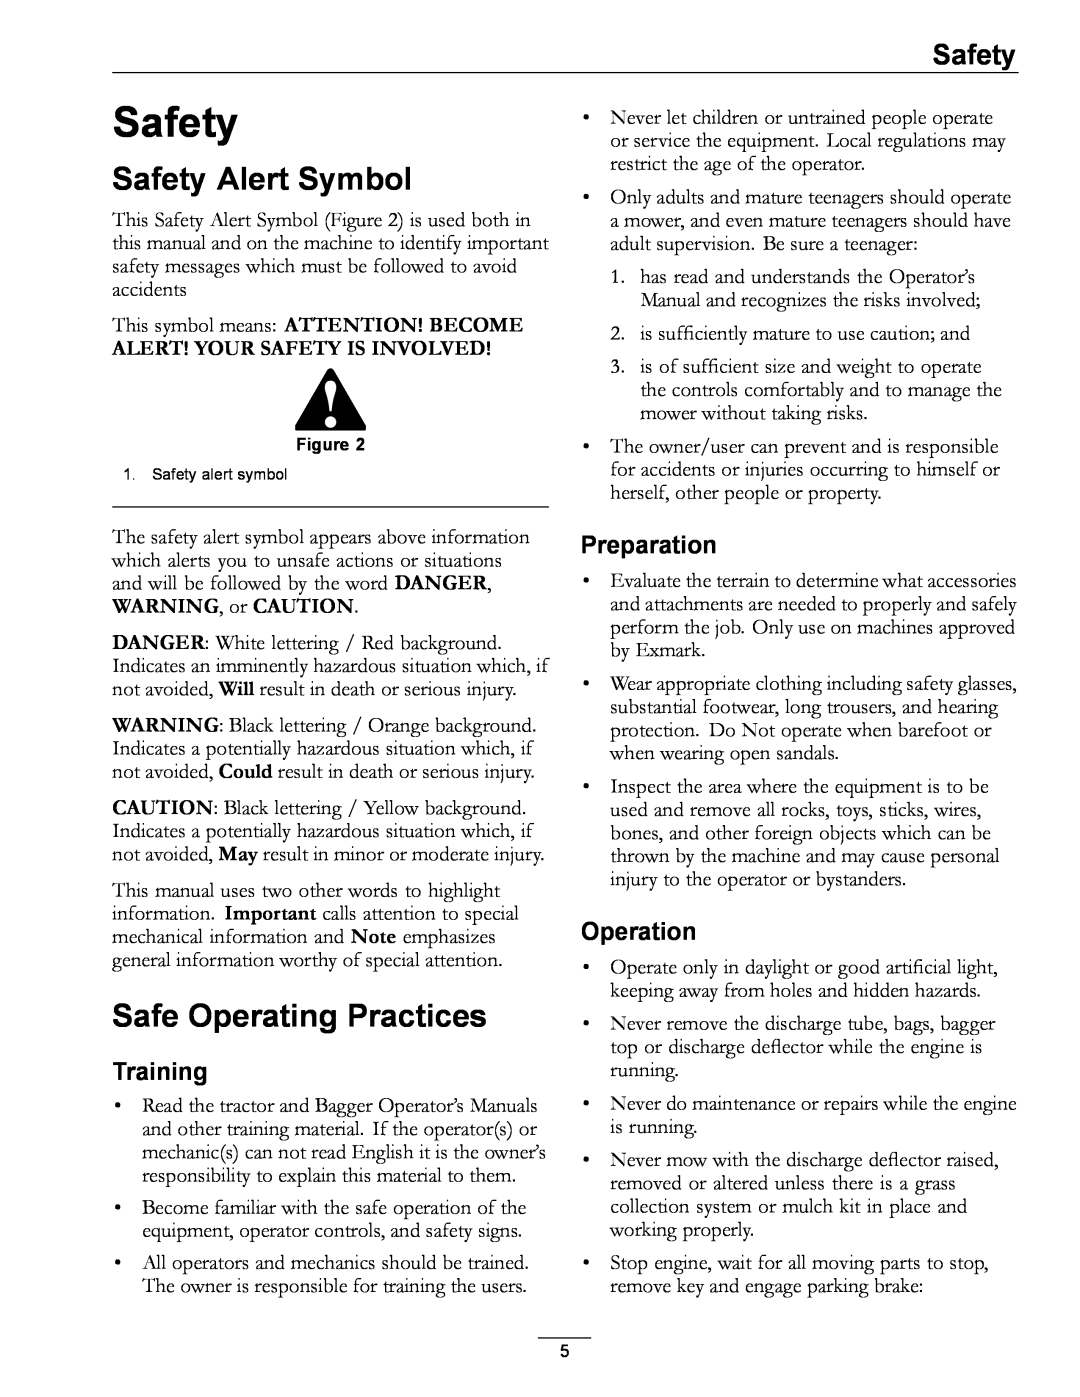 Exmark 850 manual Safety Alert Symbol, Safe Operating Practices, Training, Preparation, Operation 